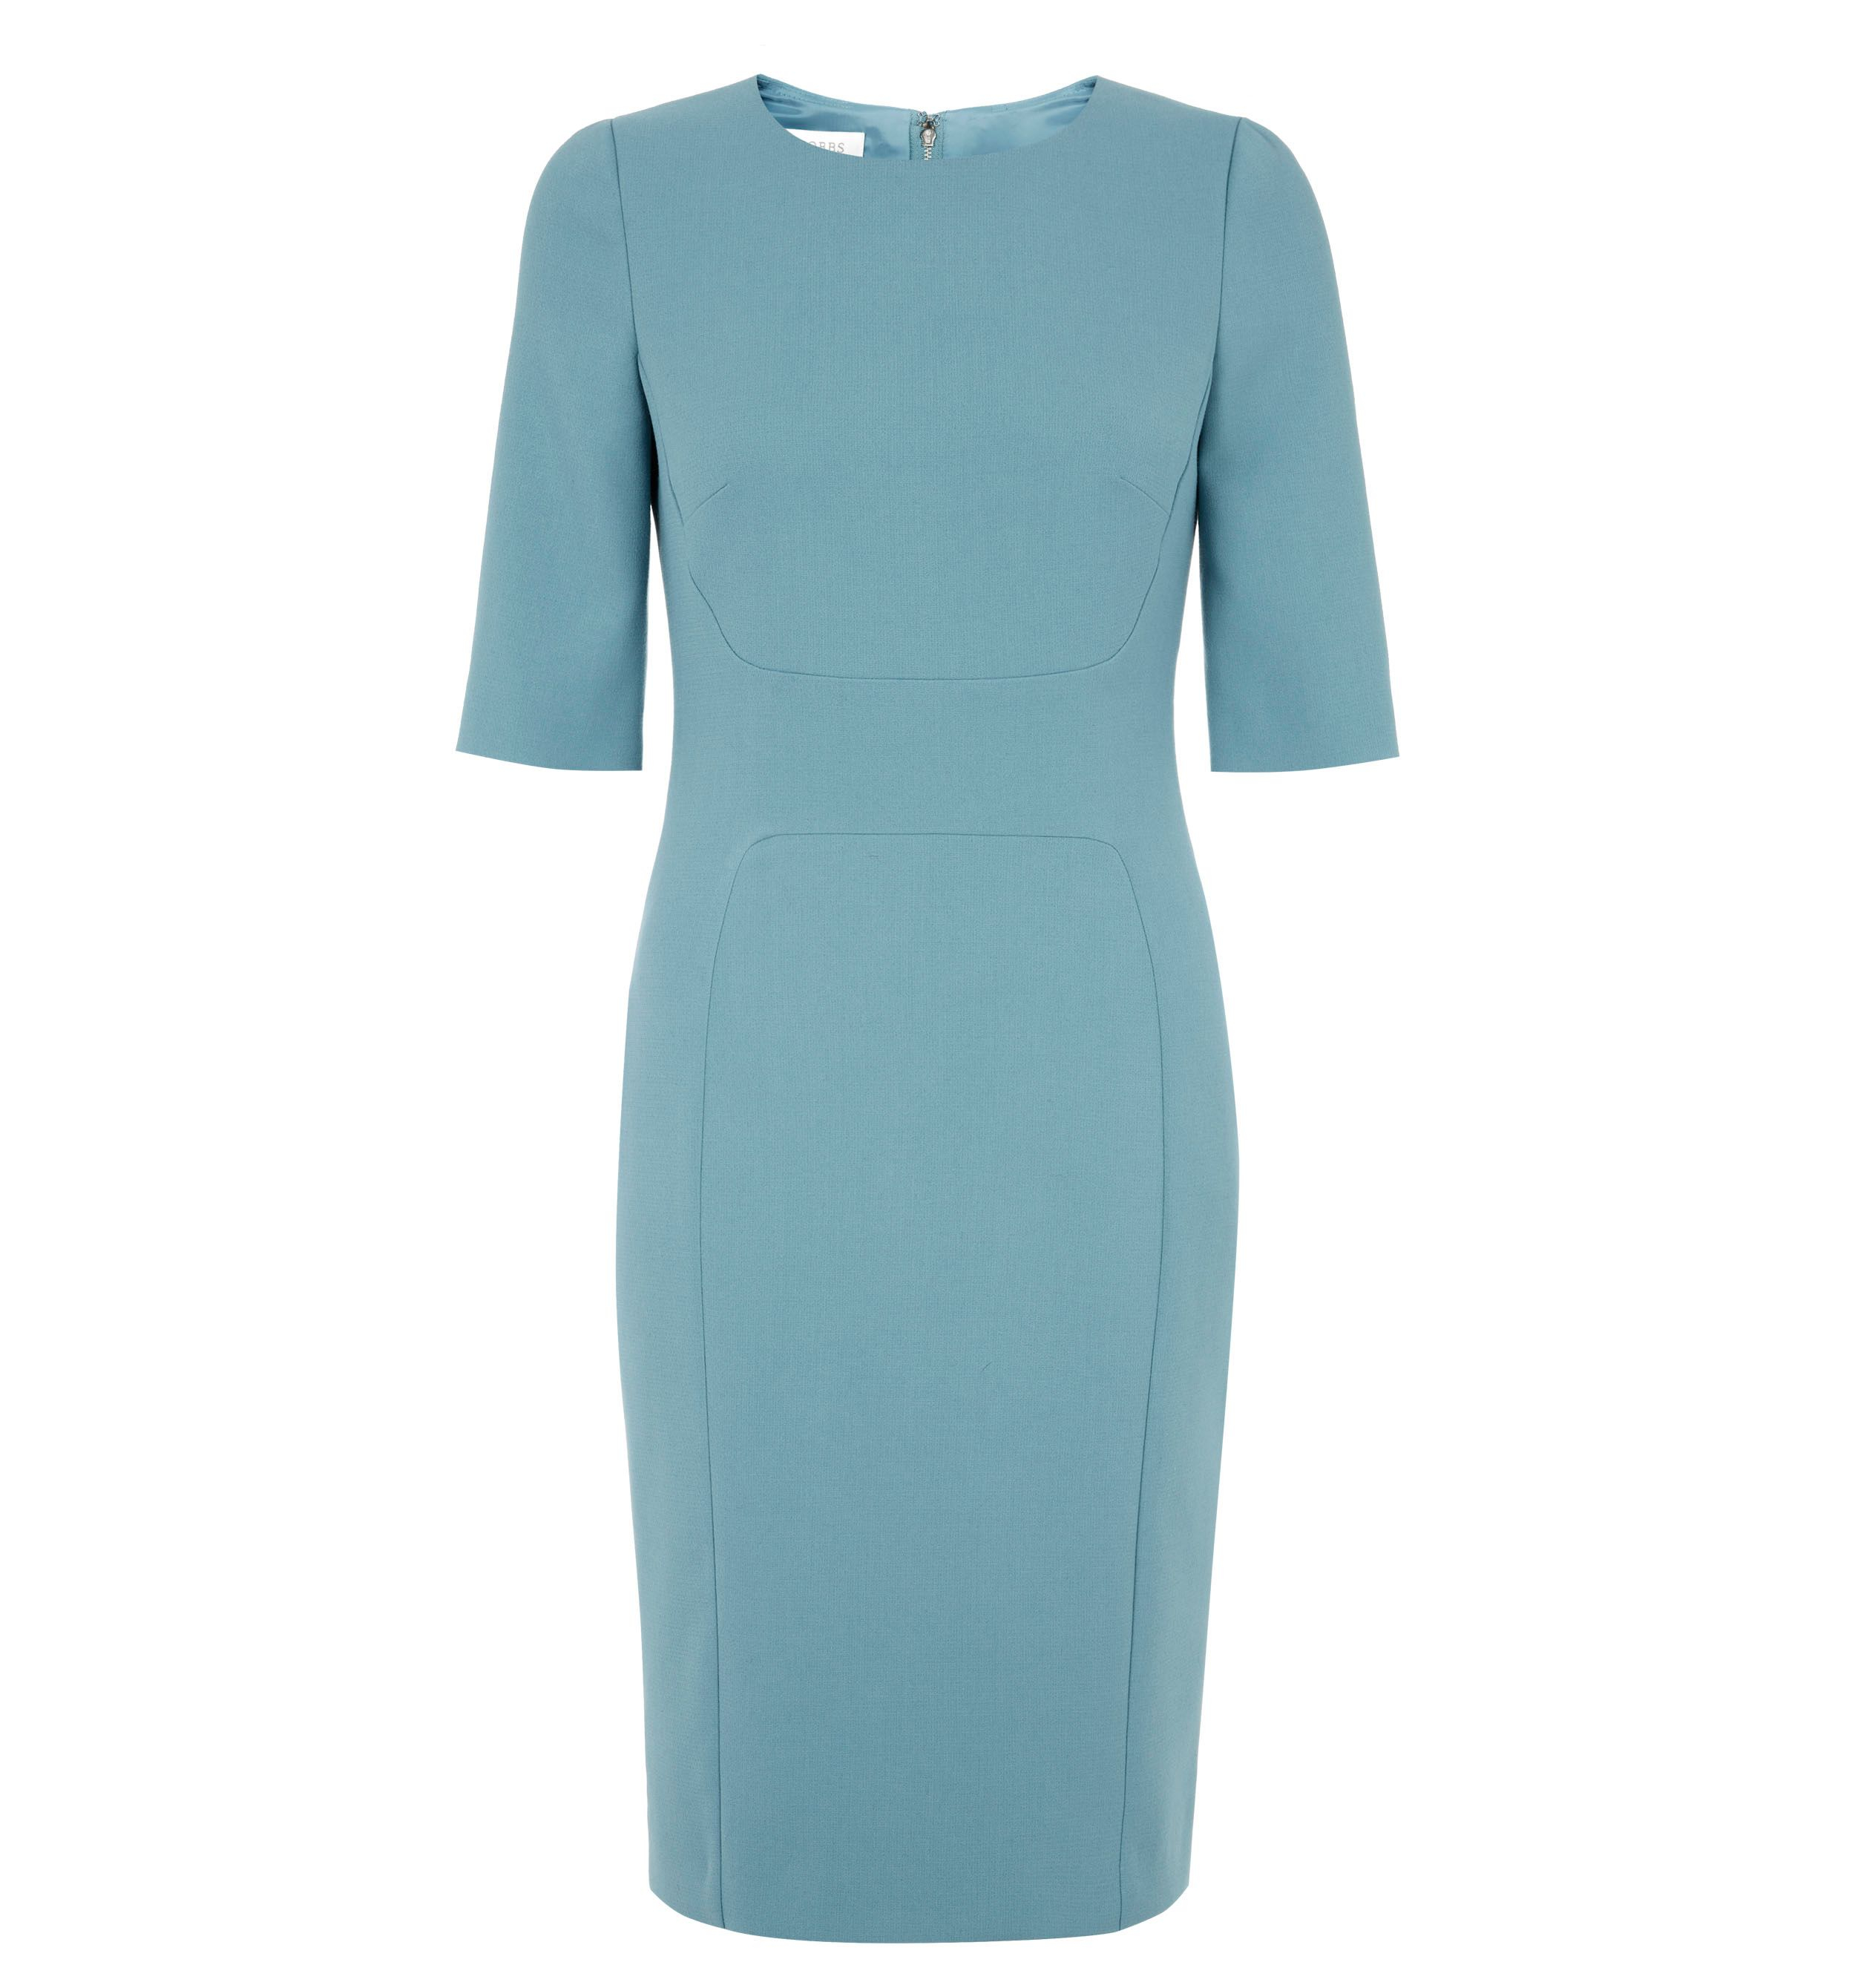 Hobbs Etoile Dress in Blue | Lyst